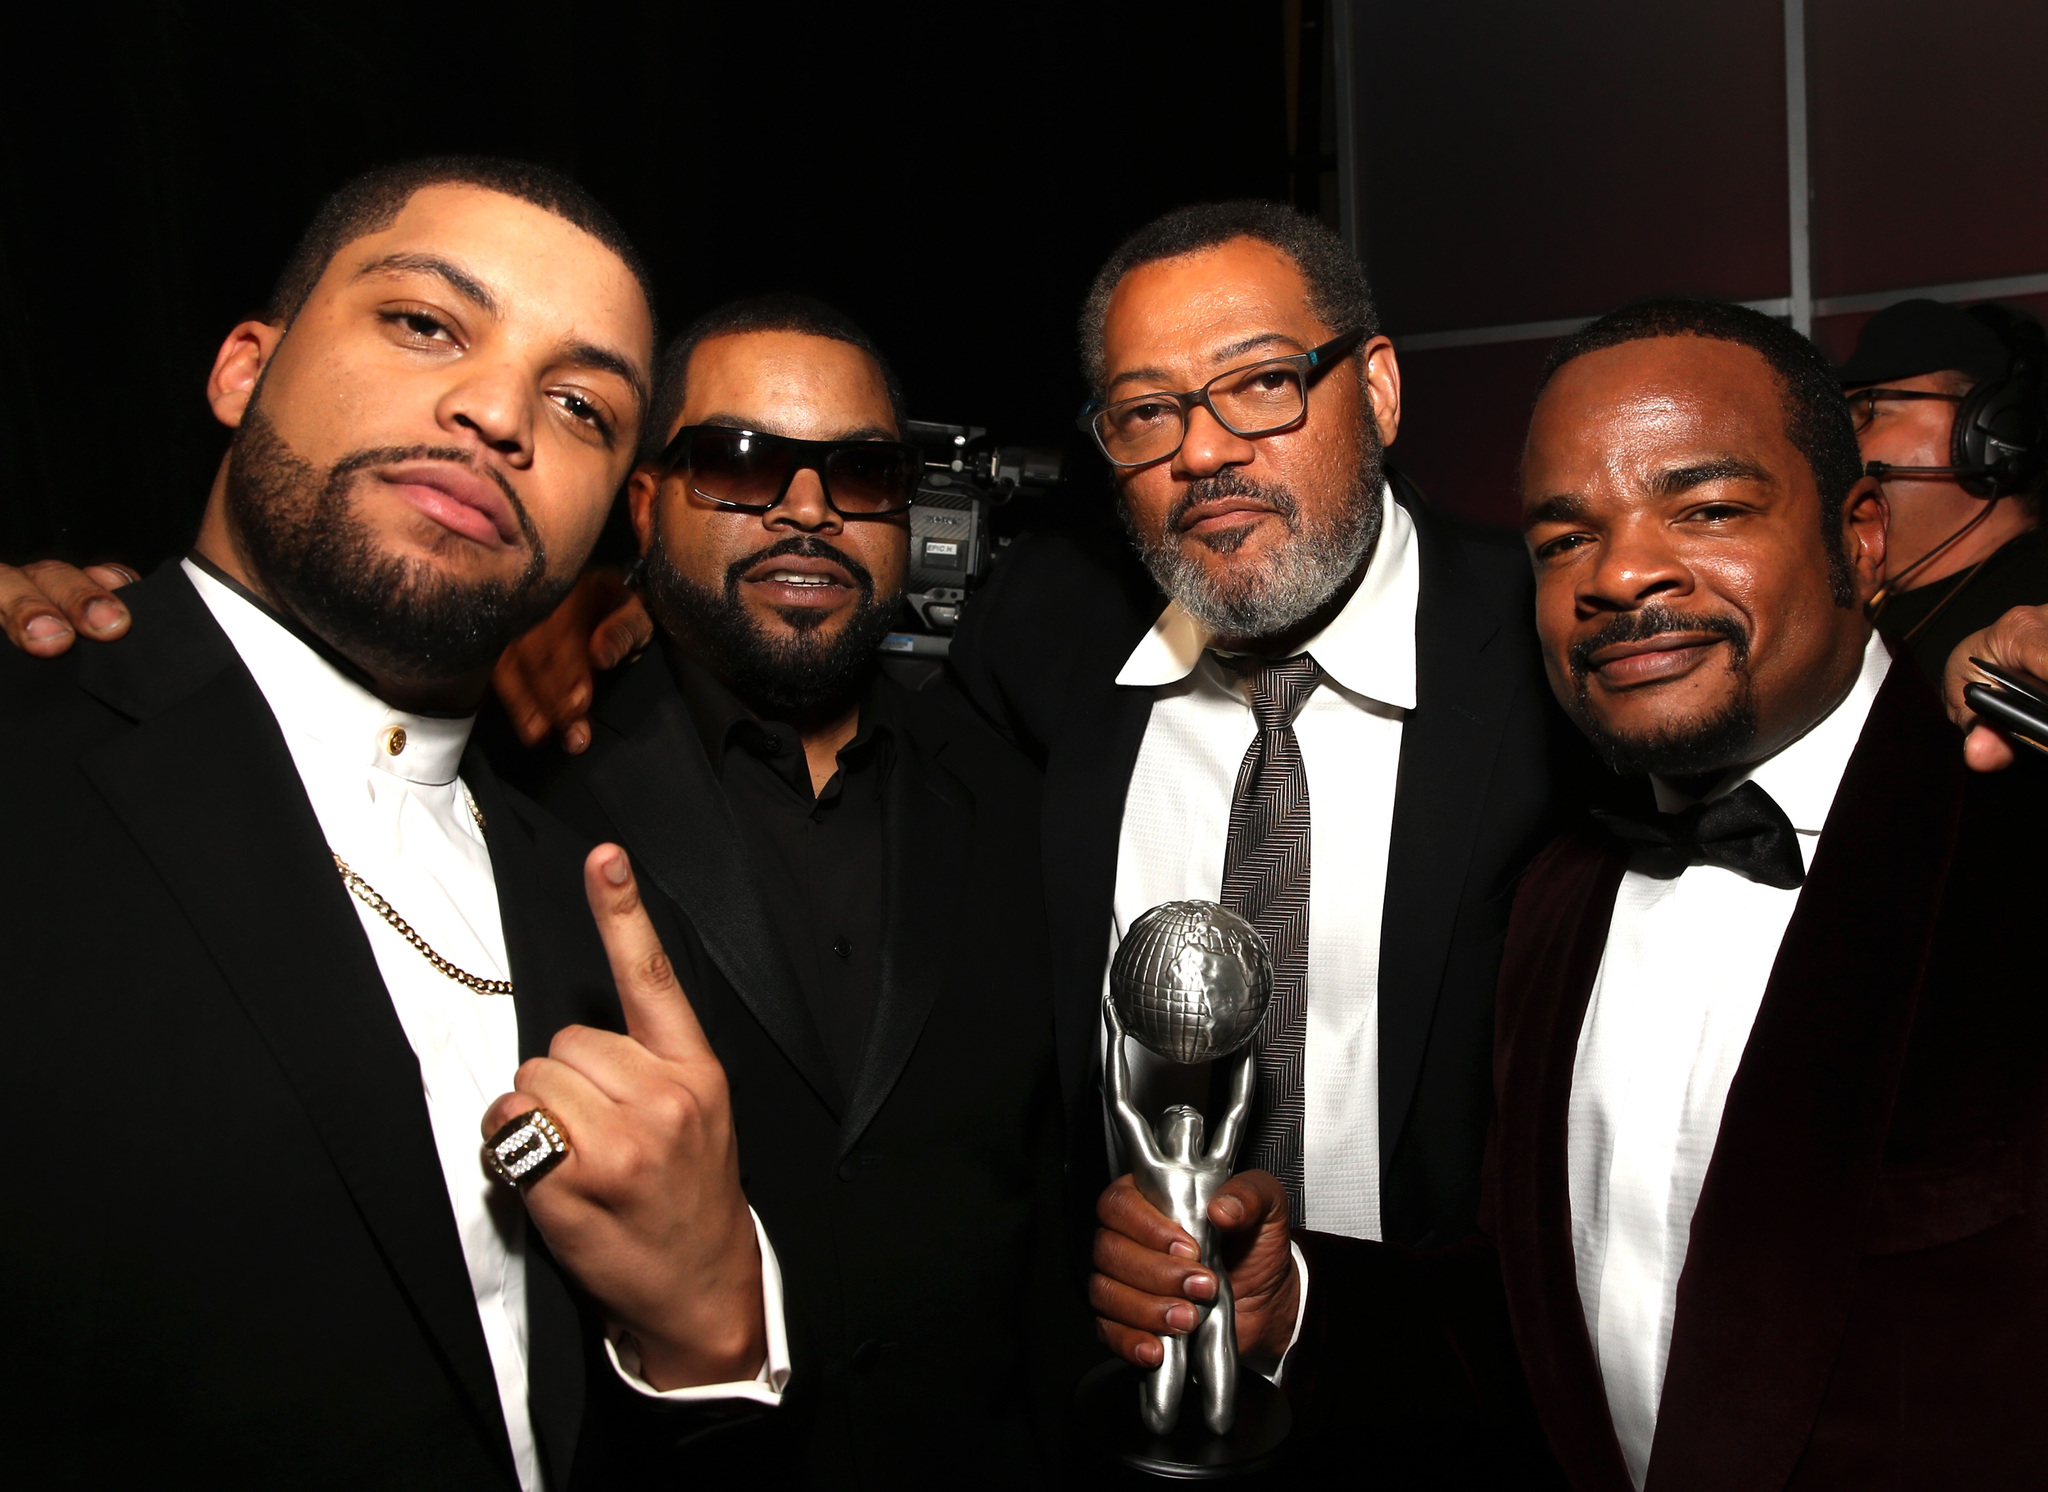 Laurence Fishburne, Ice Cube, F. Gary Gray and O'Shea Jackson Jr.